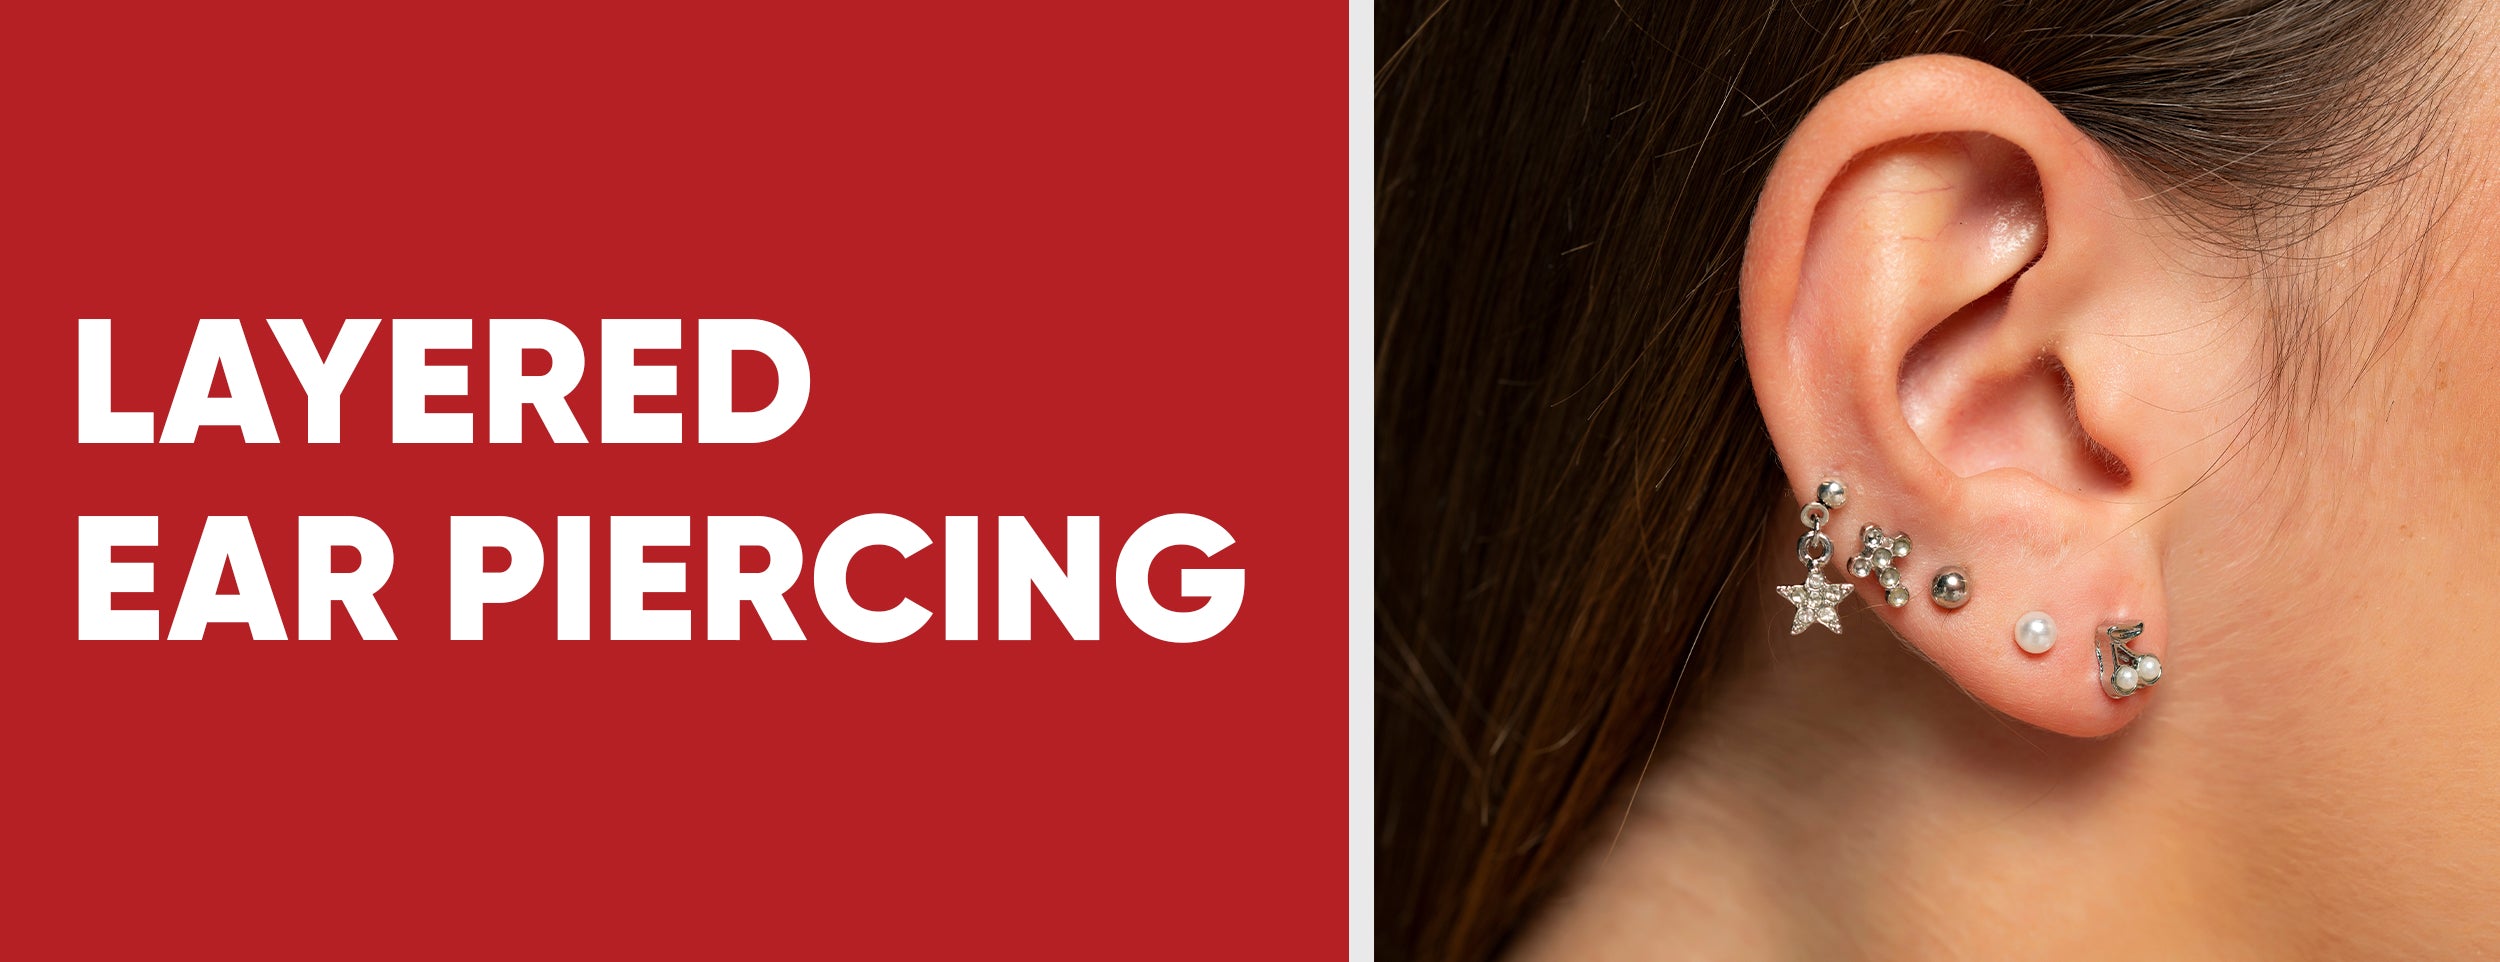 Layered Ear Piercing